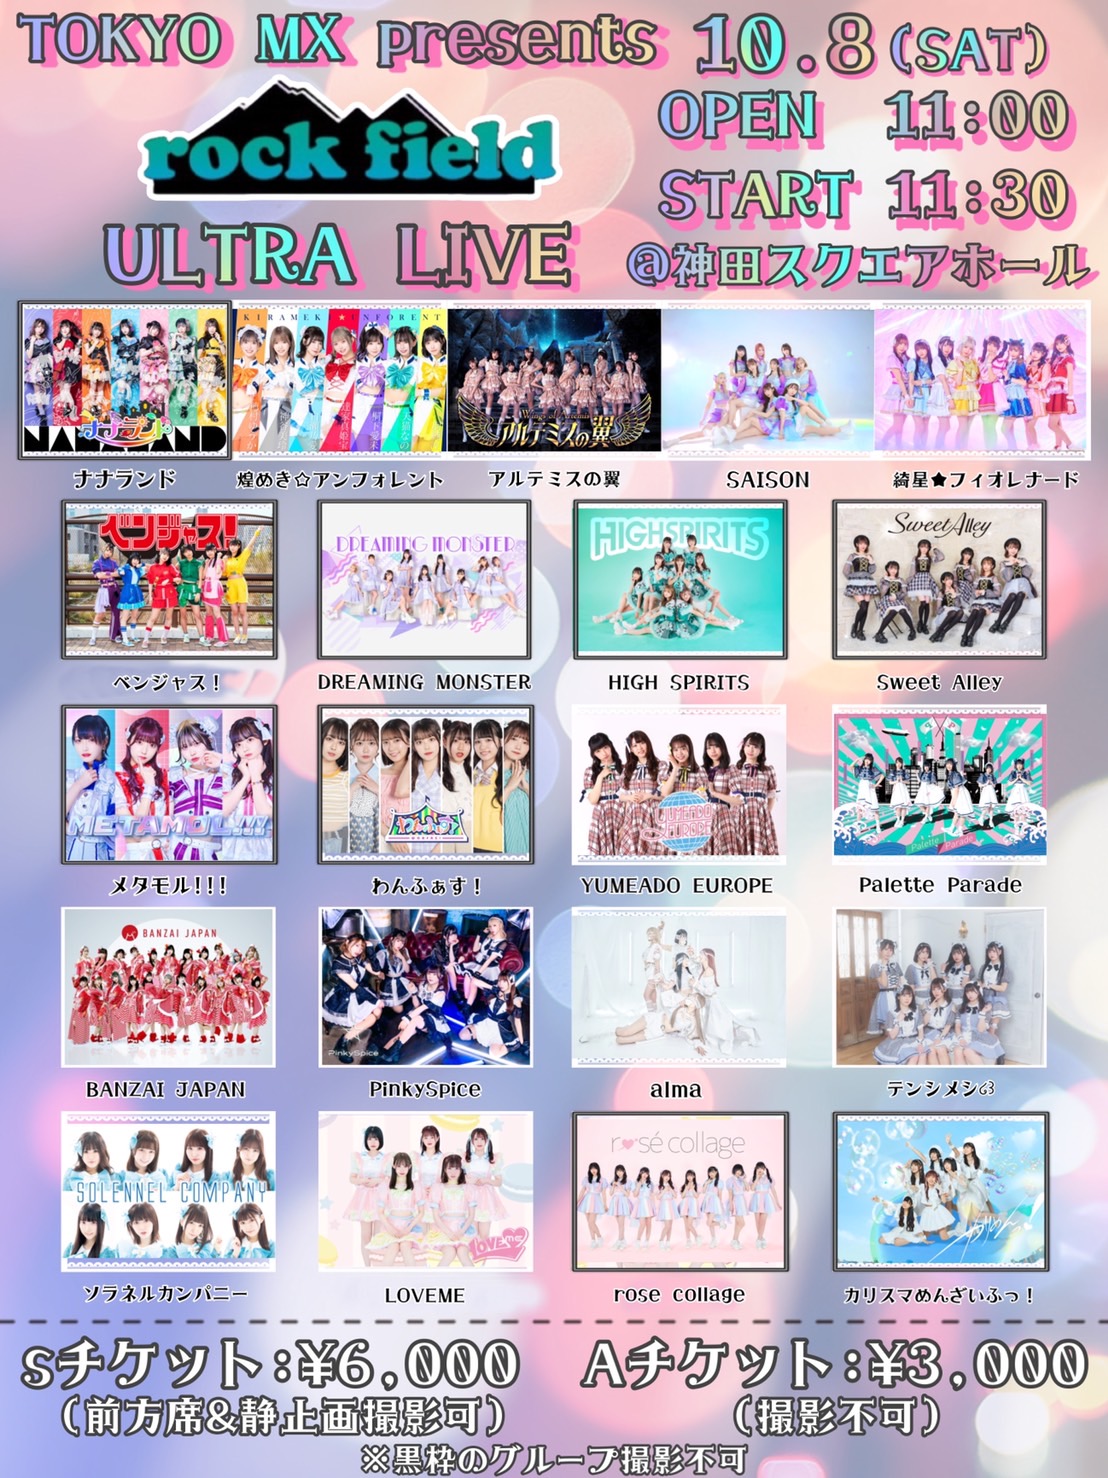 「TOKYO MX presents rock field ULTRA LIVE」開催決定！